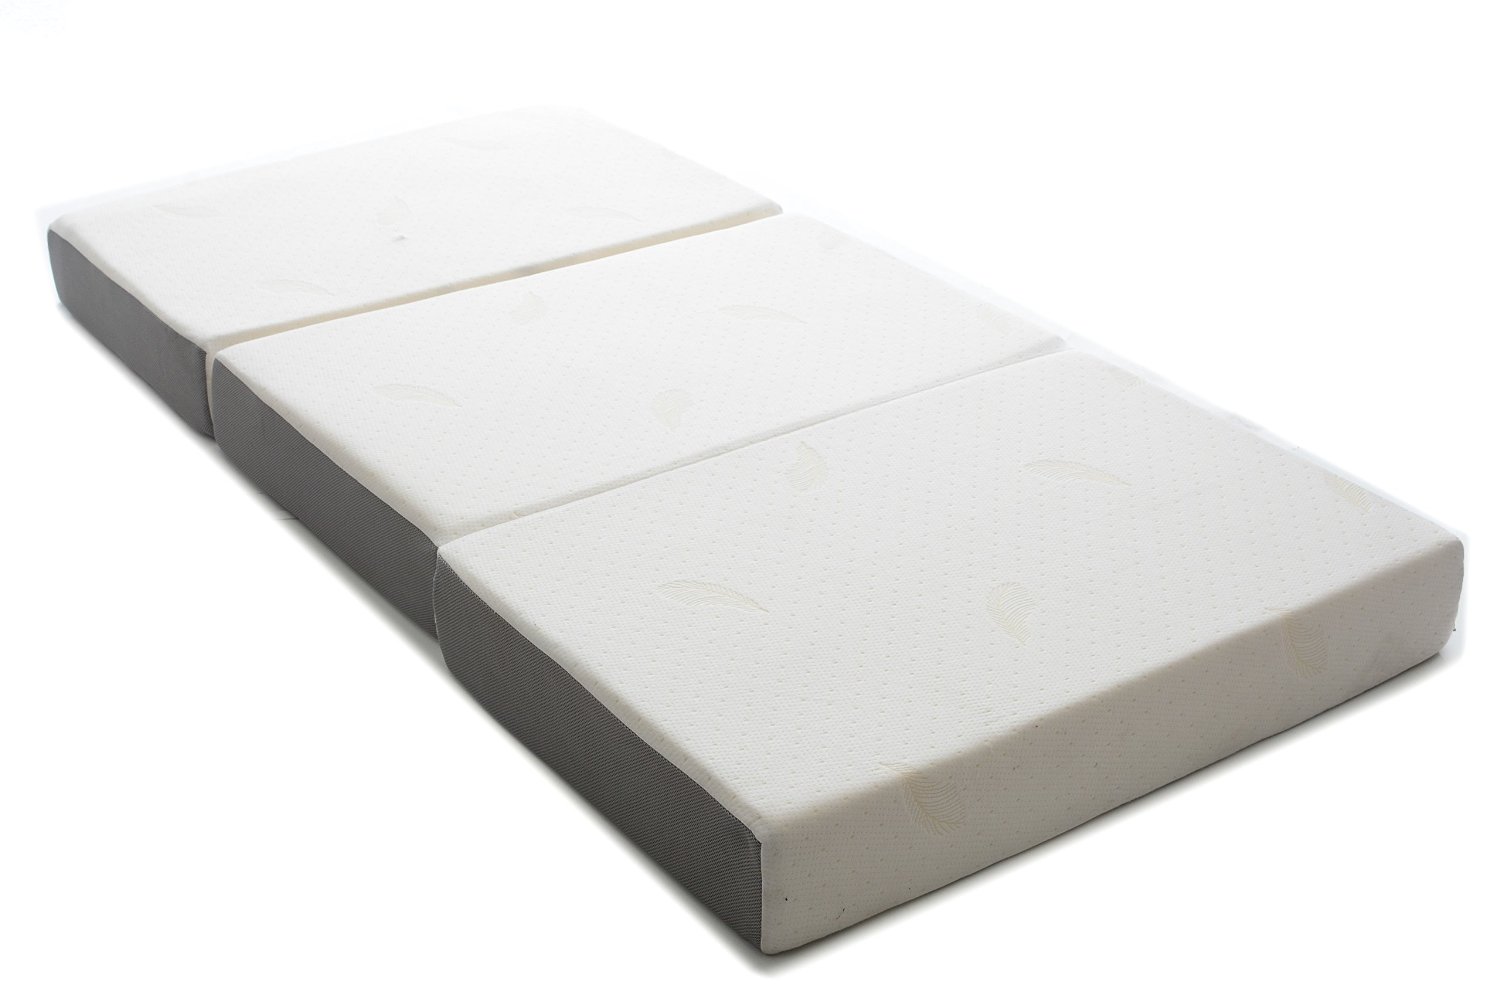 6 inch tri fold mattress